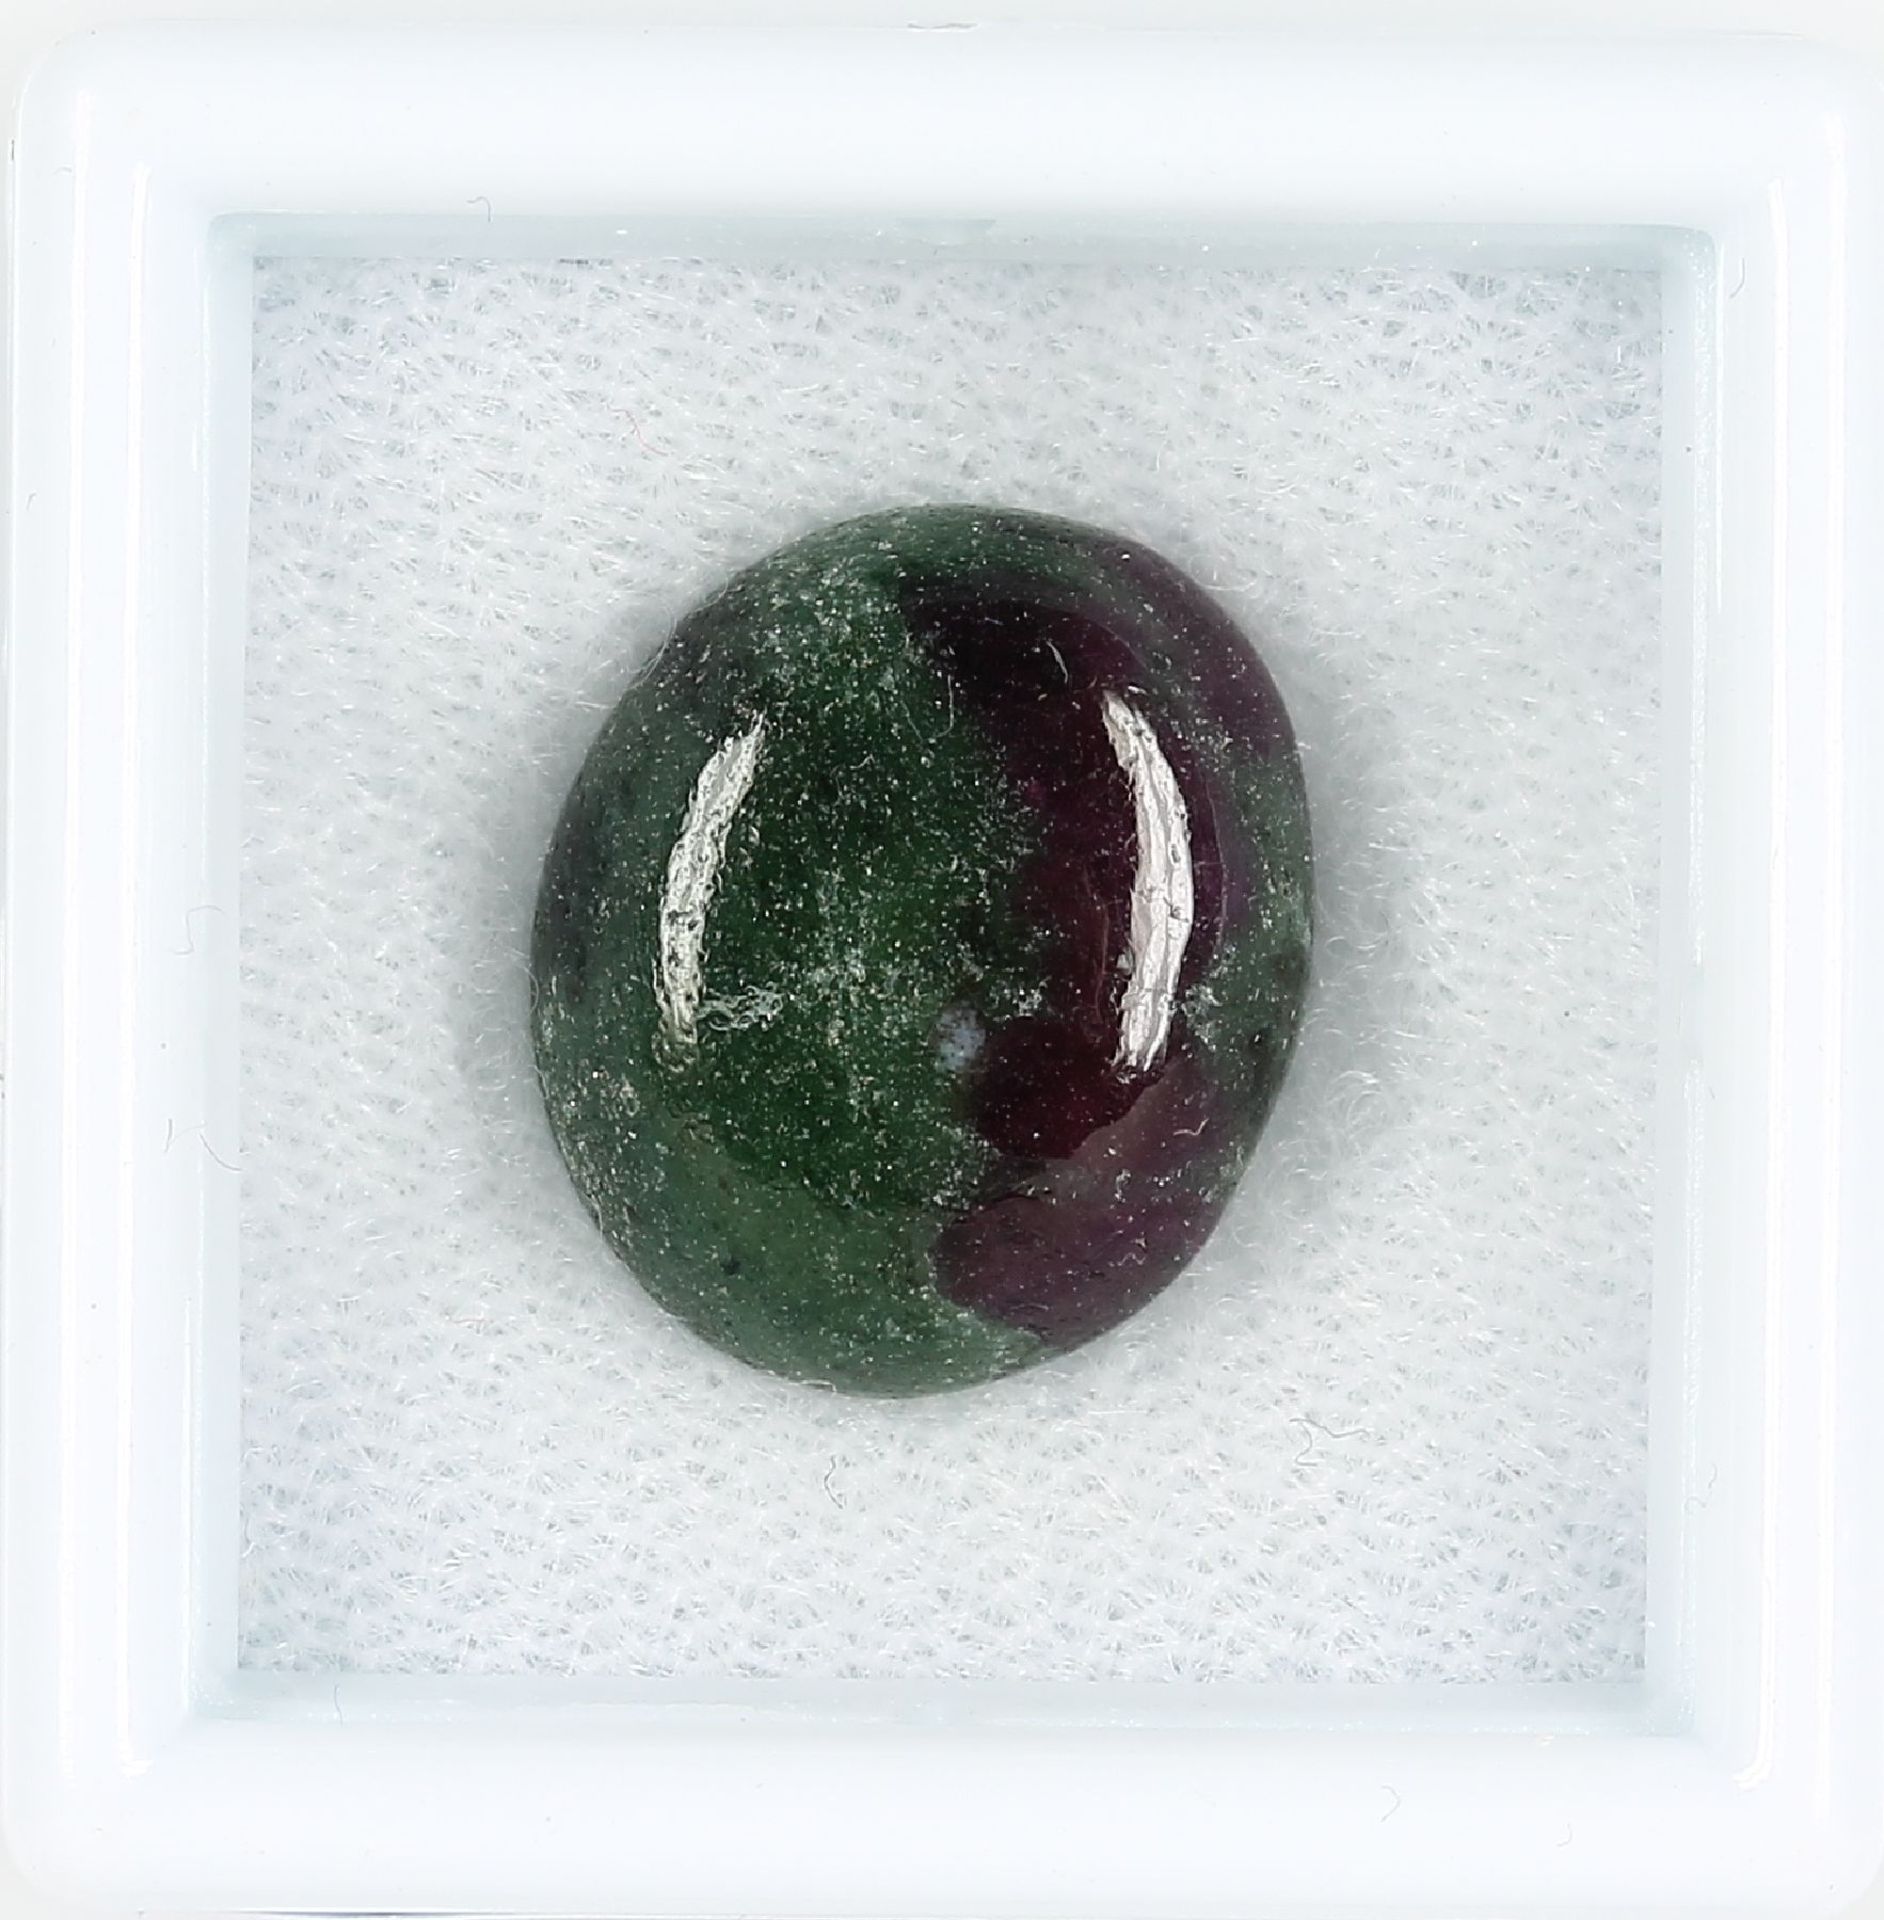 Loser ovaler Rubinzoisitcabochon, 10.54 ct rot/grün, ca. 14.52 x 12.44 x 5.62 mm, mit Expertise, GCI